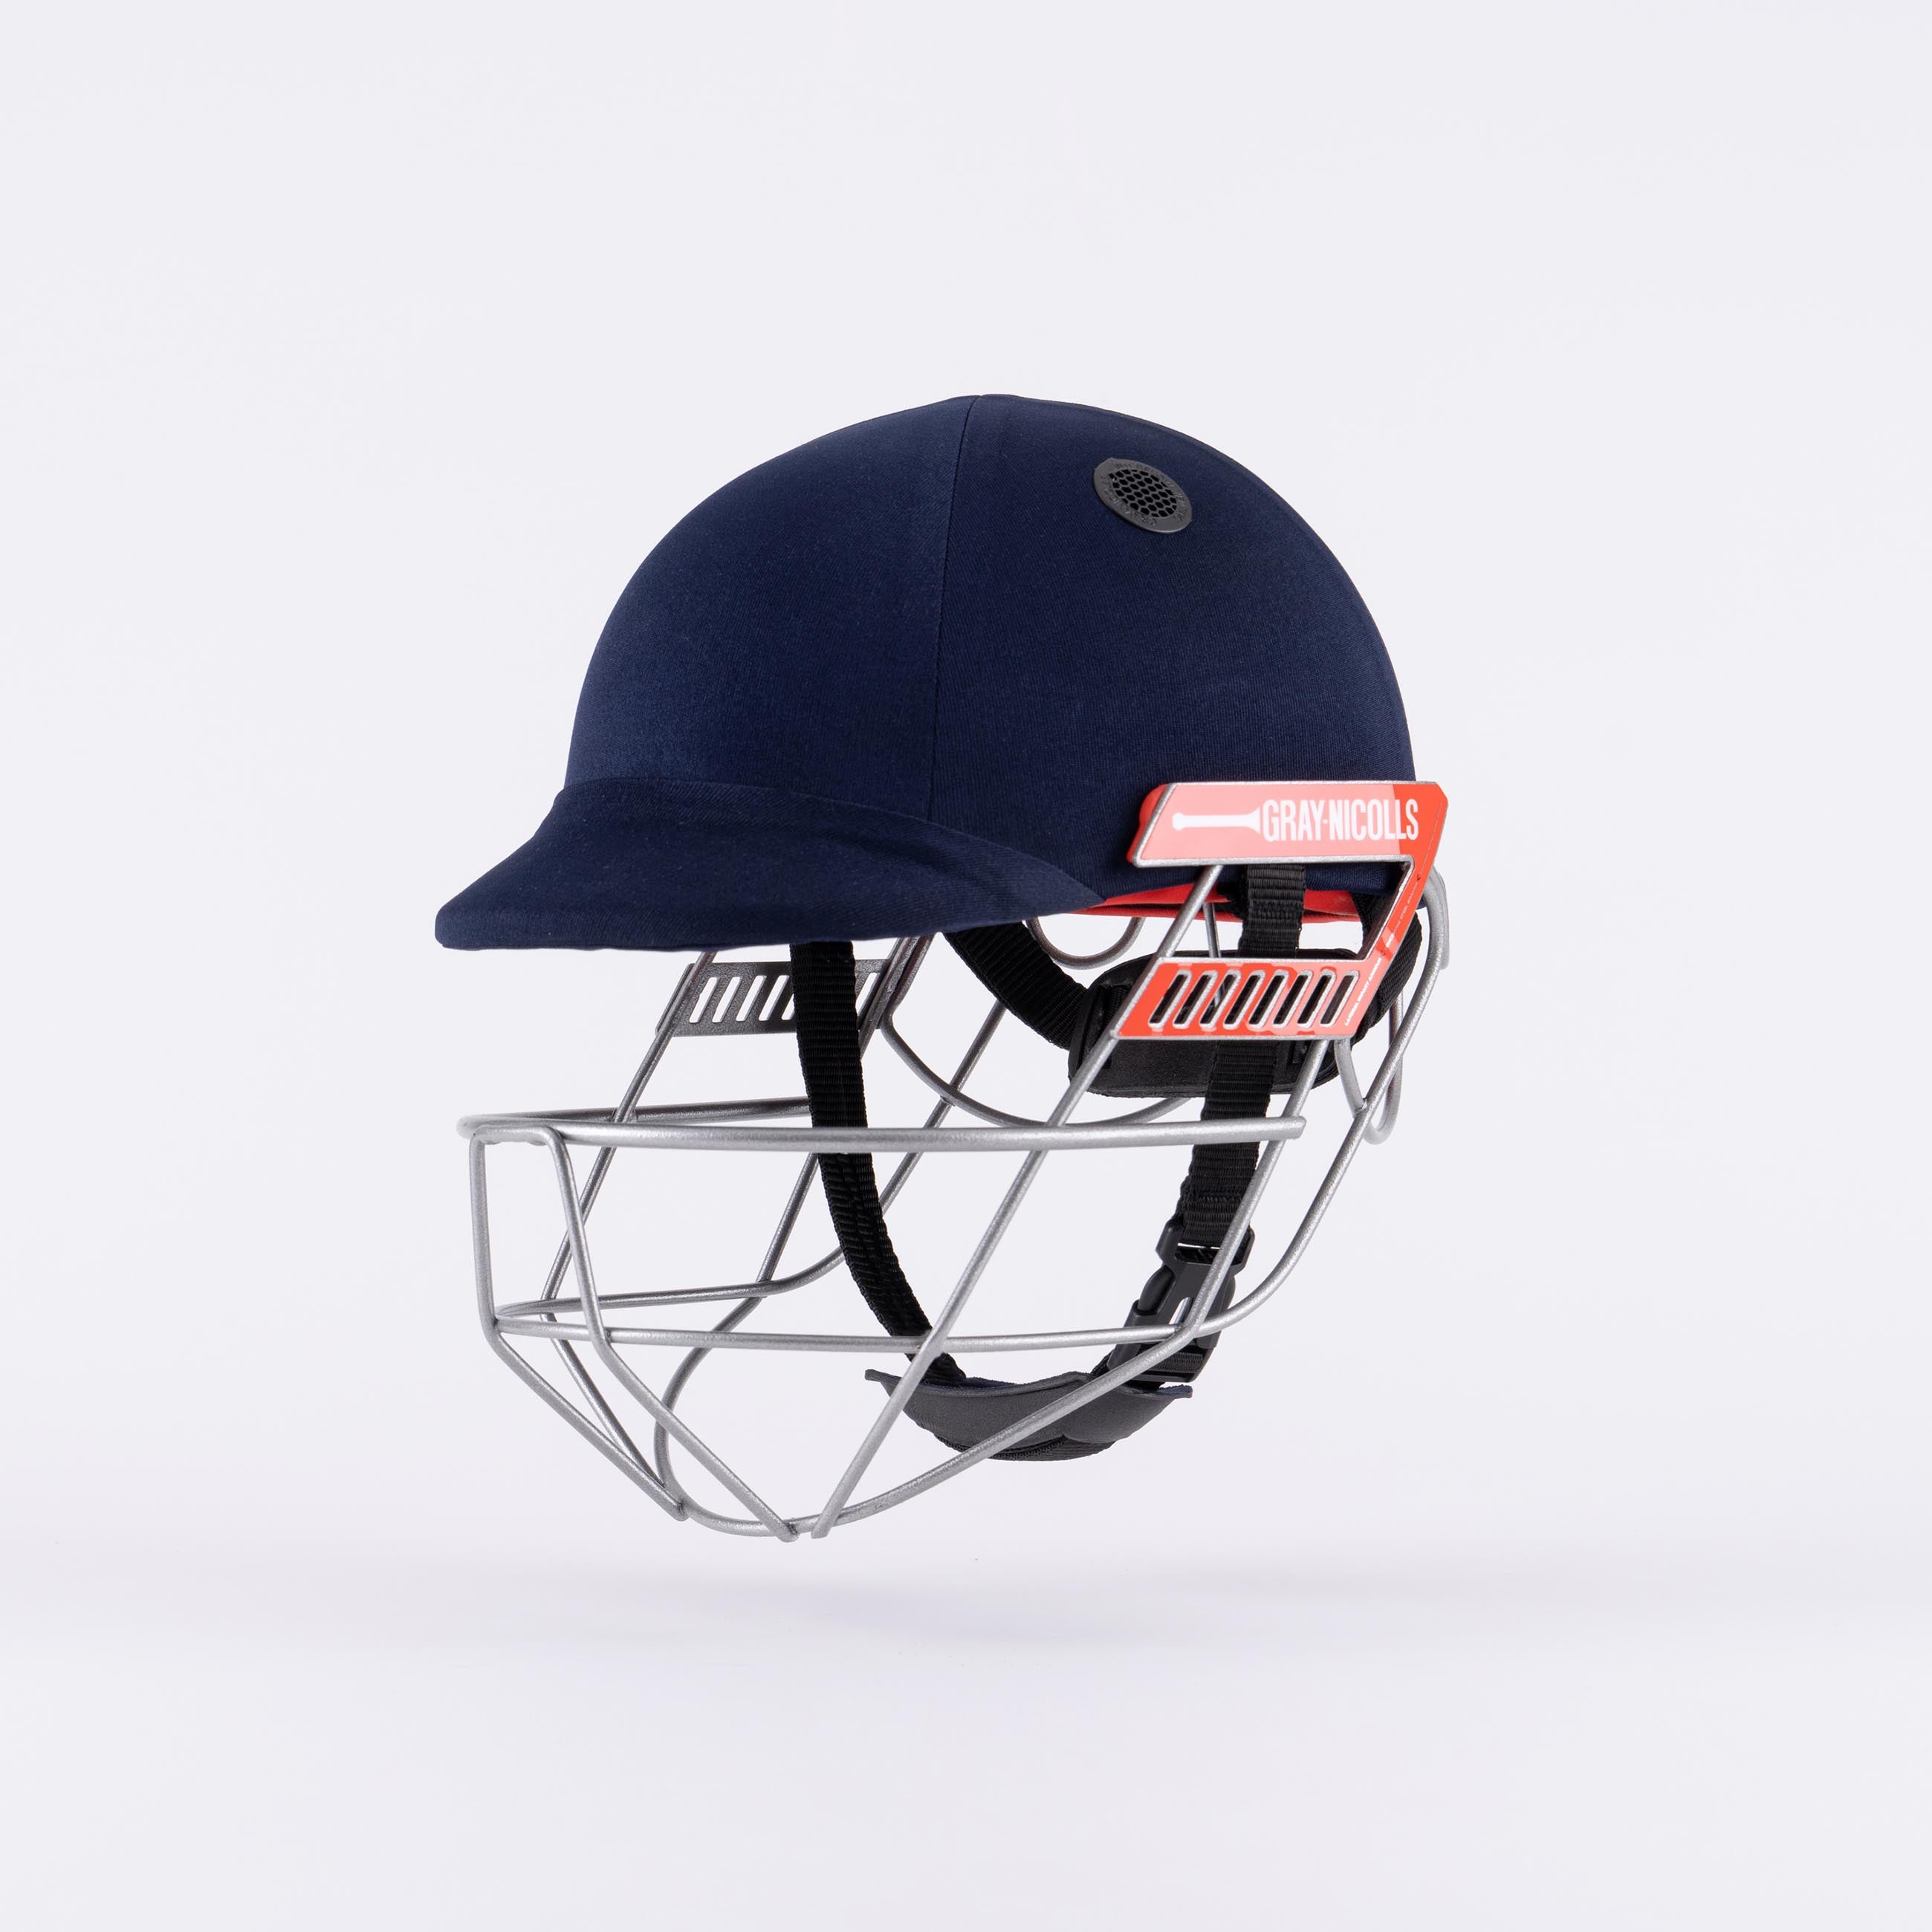 Ultimate 360 Pro Helmet